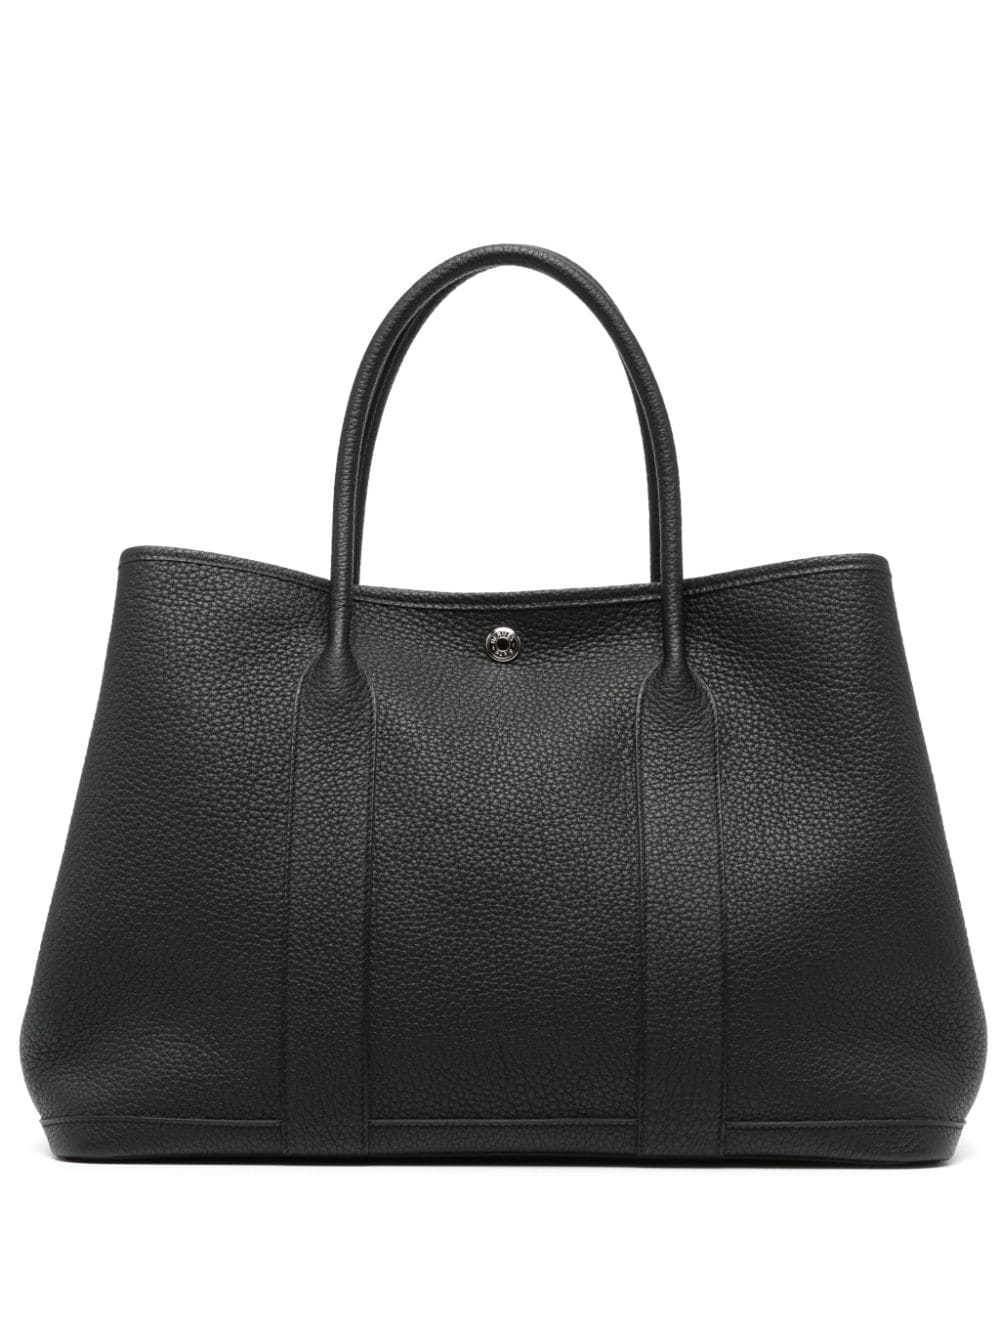 Image 1 of Hermès Pre-Owned Garden Party handbag